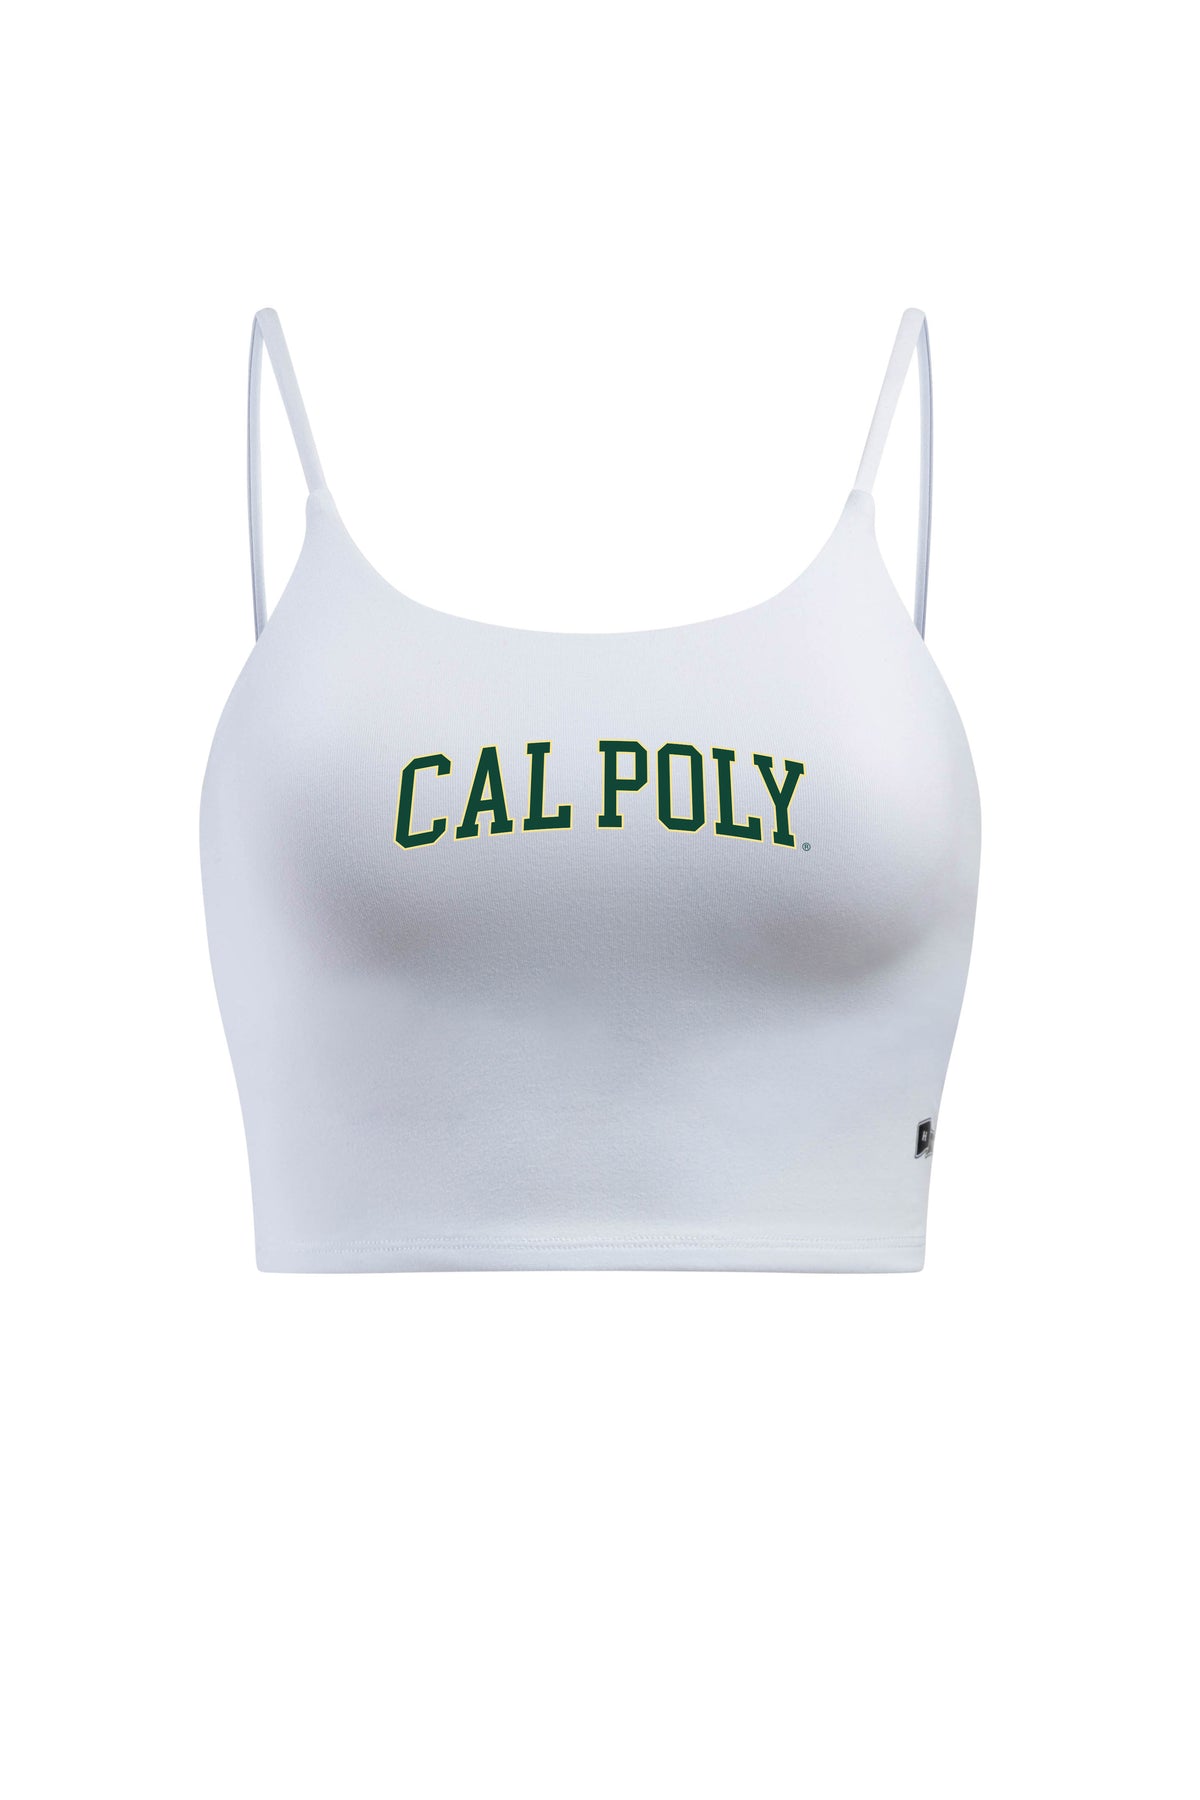 California Polytechnic State University Bra Tank Top